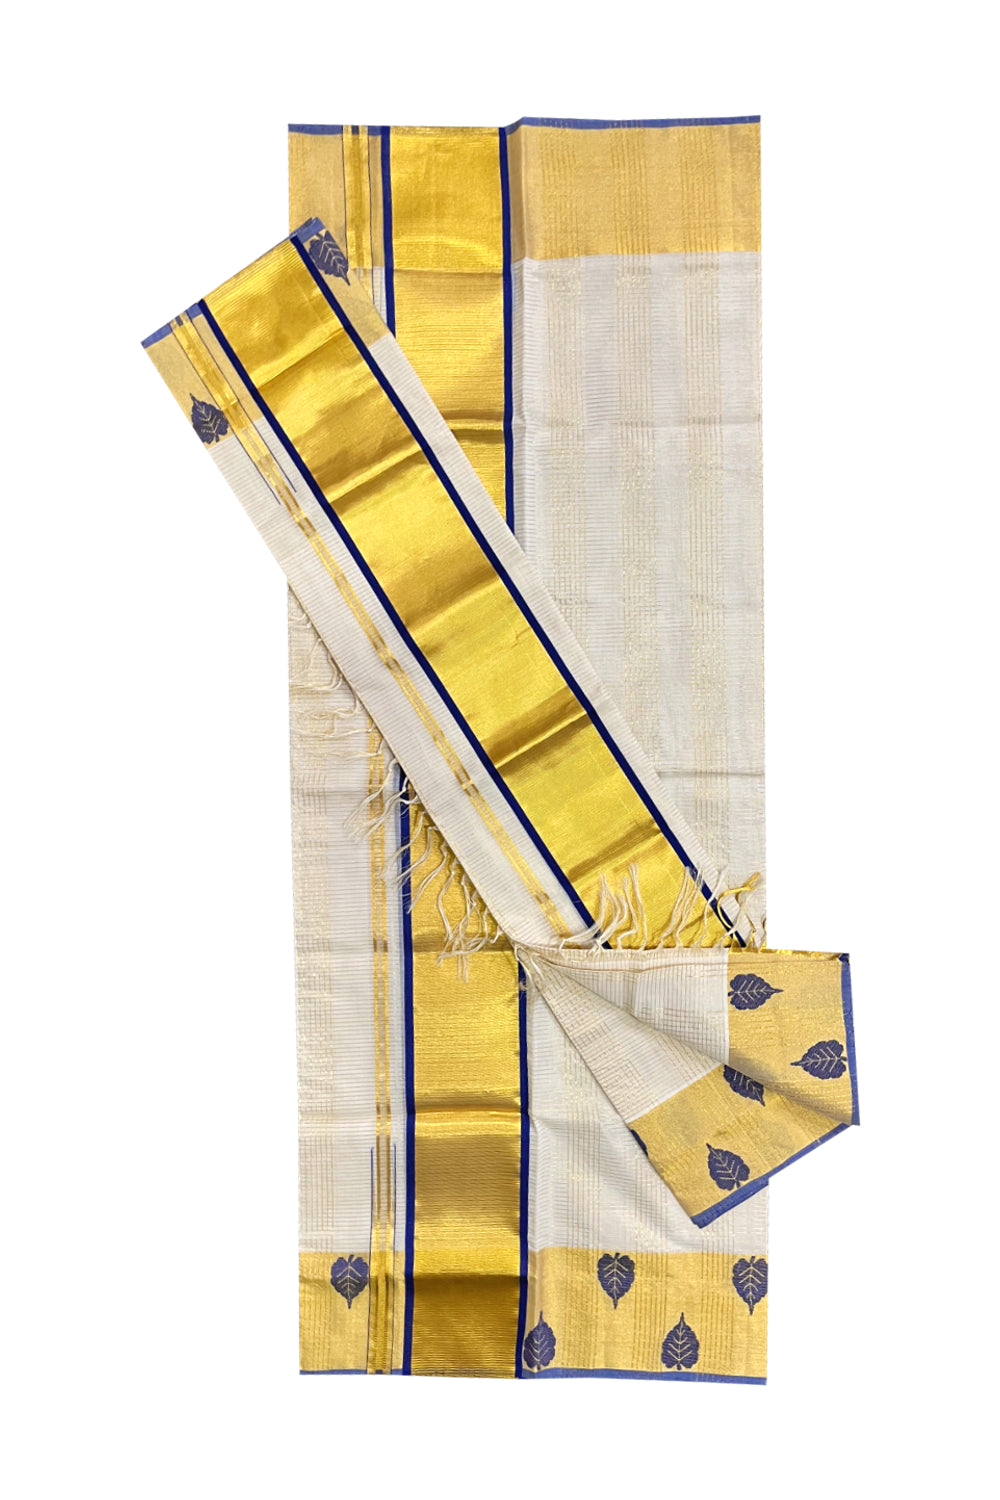 Southloom Handloom Premium Cotton Kasavu Striped Set Mundu With Blue Leaf Woven Patterns (Mundum Neriyathum) 2.70 Mtrs